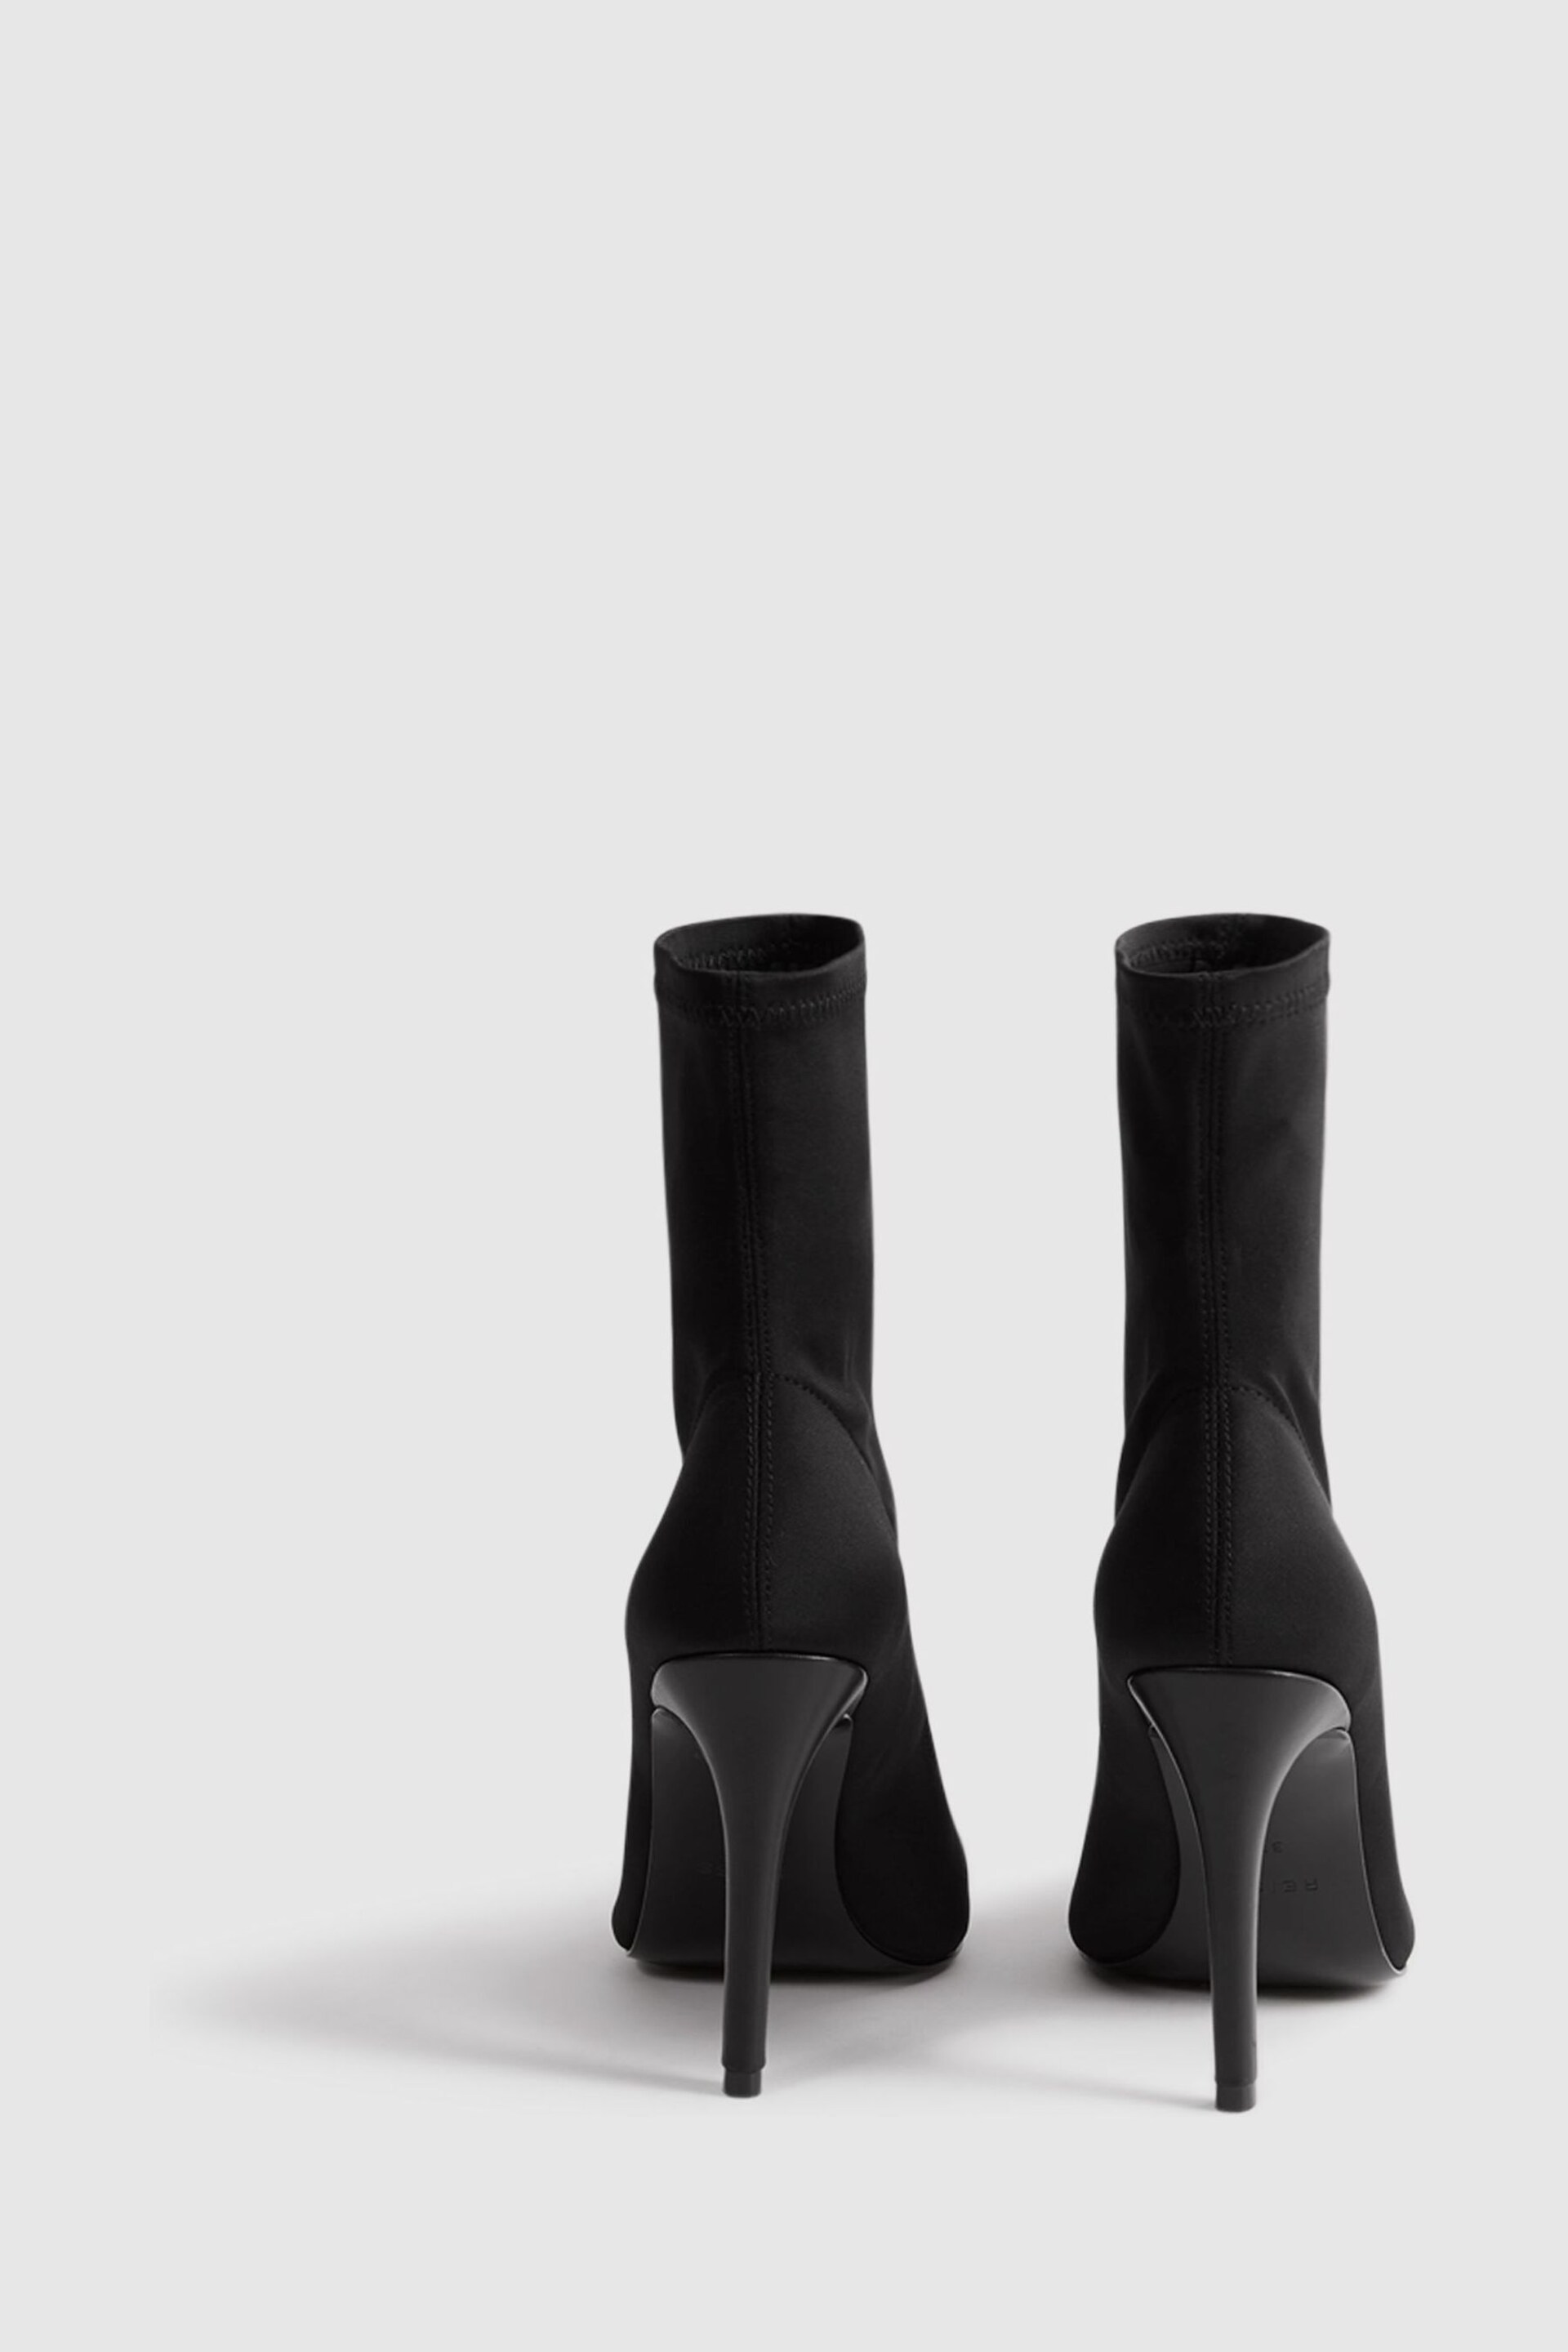 Reiss Black Dakota Heeled Sock Boots - Image 5 of 6